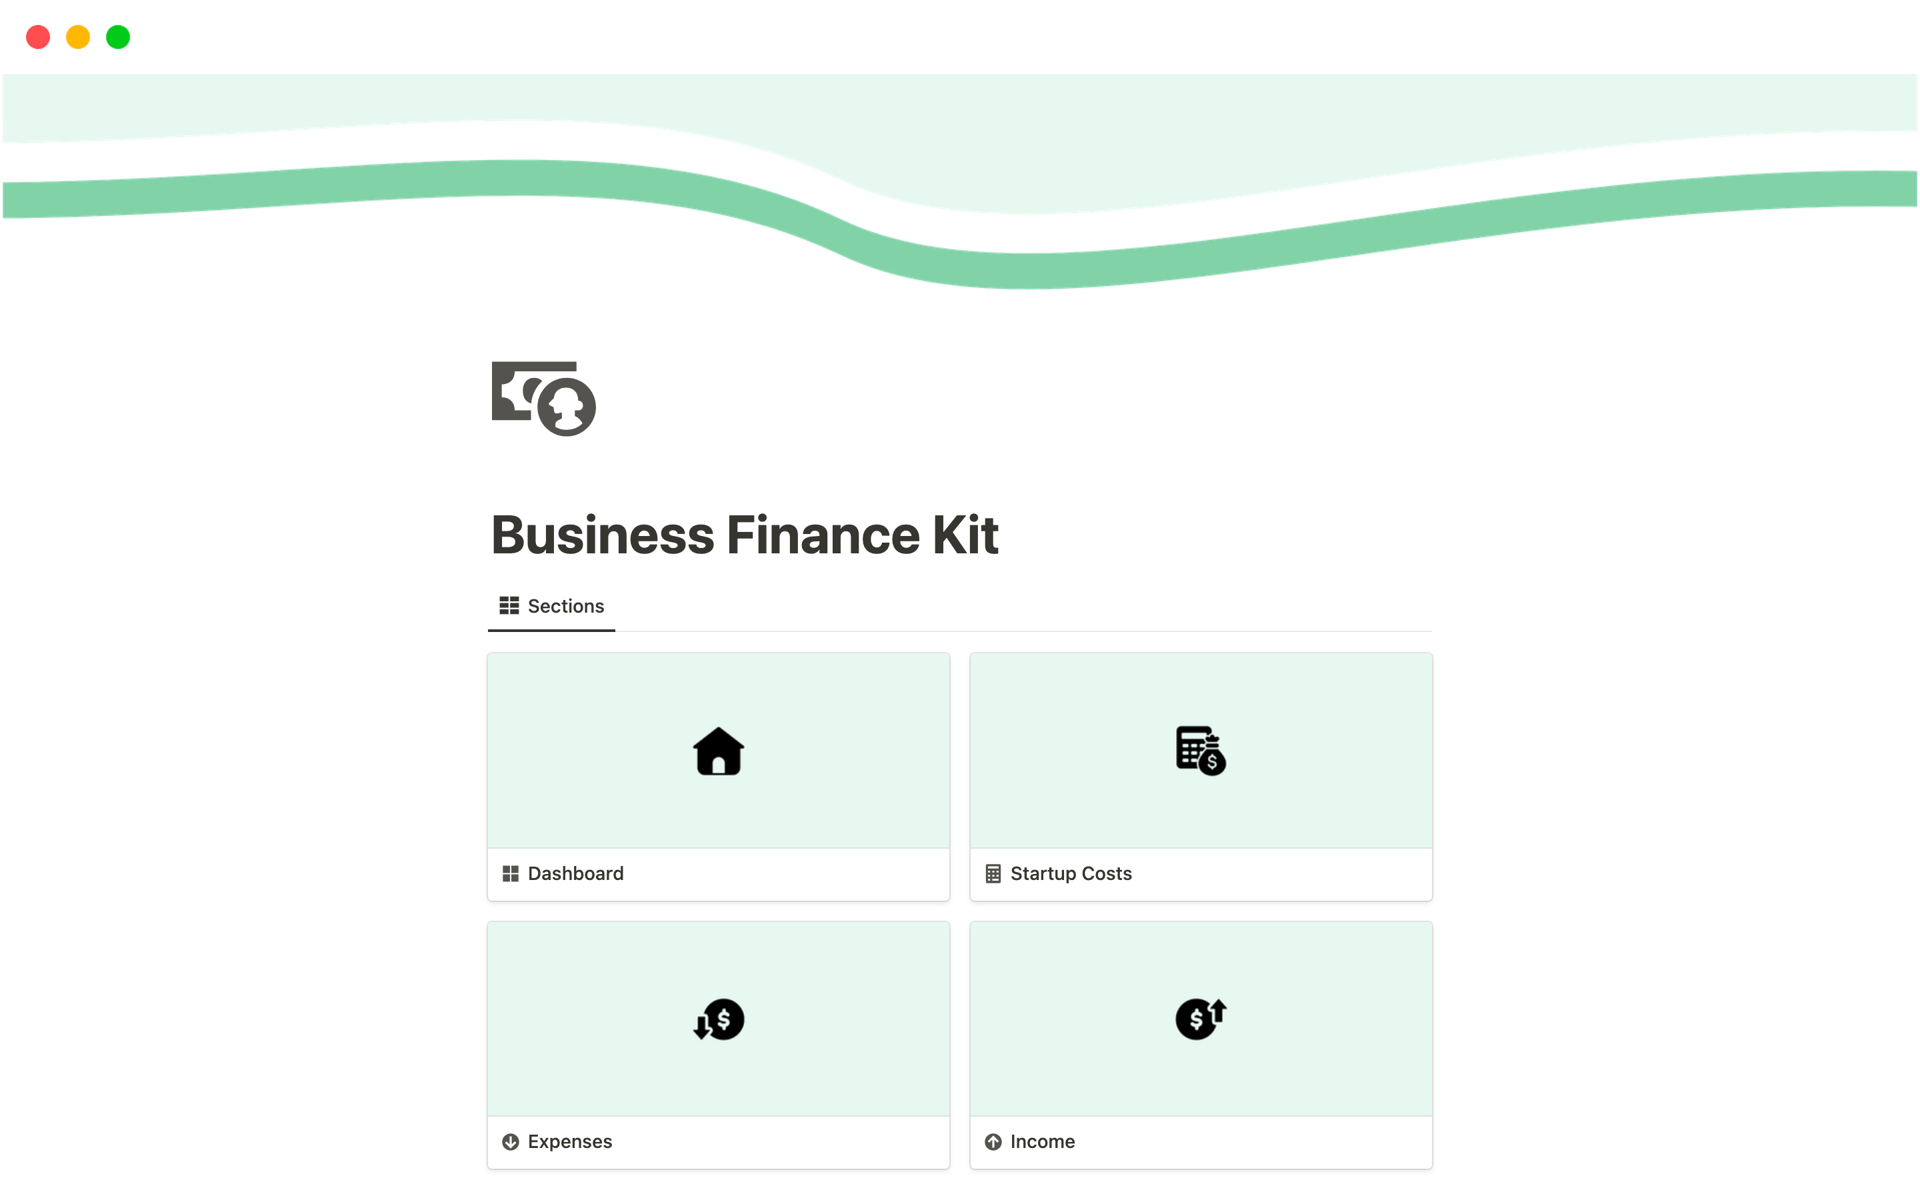 Vista previa de plantilla para Business Finance Kit